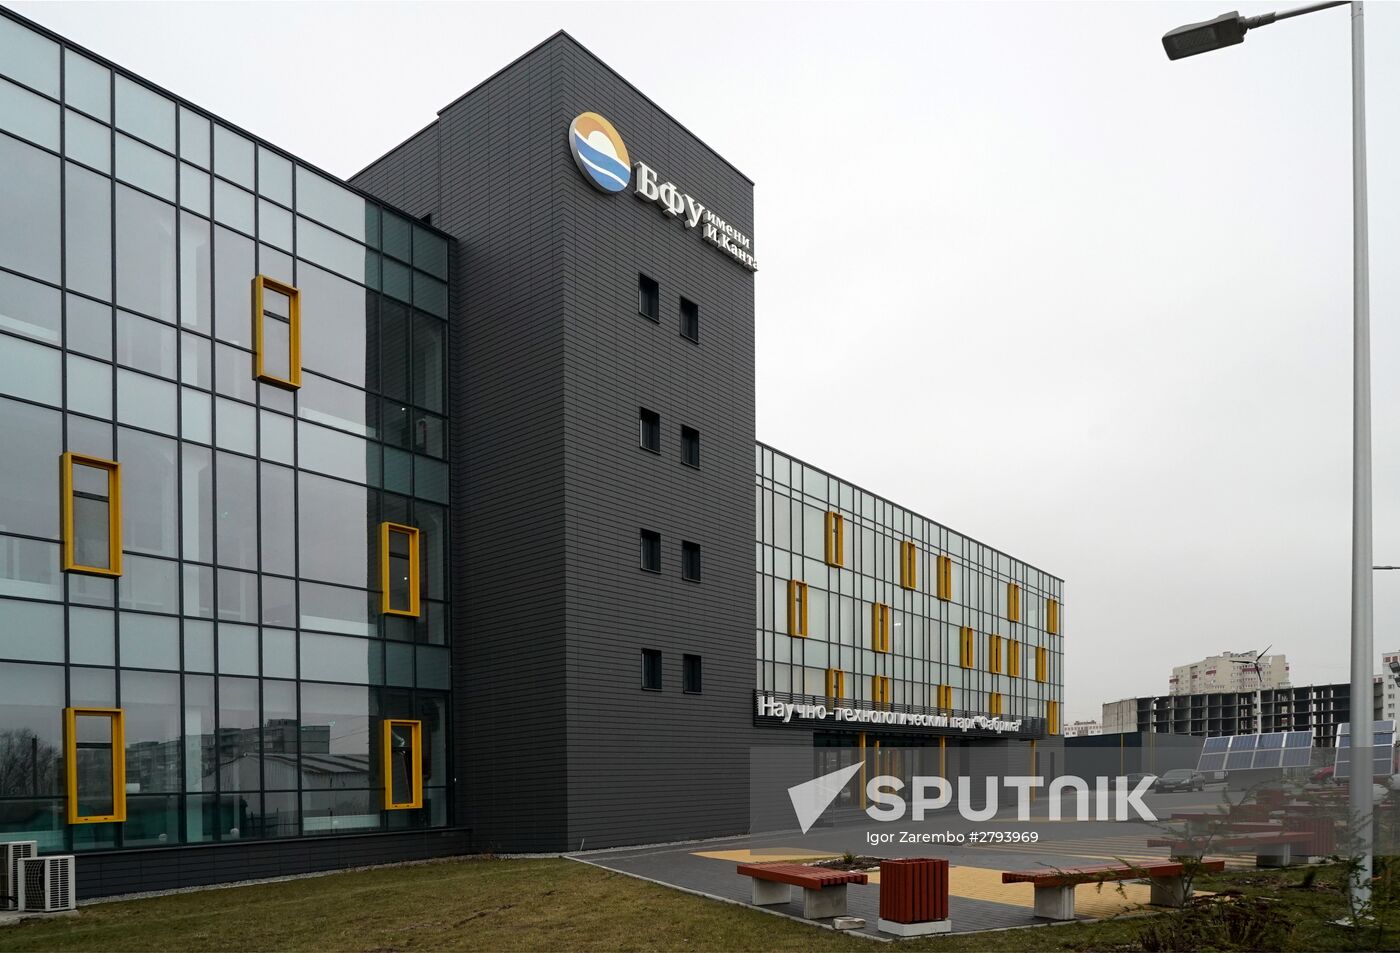 The Kant Baltic Federal University's Fabrika technology park in Kaliningrad